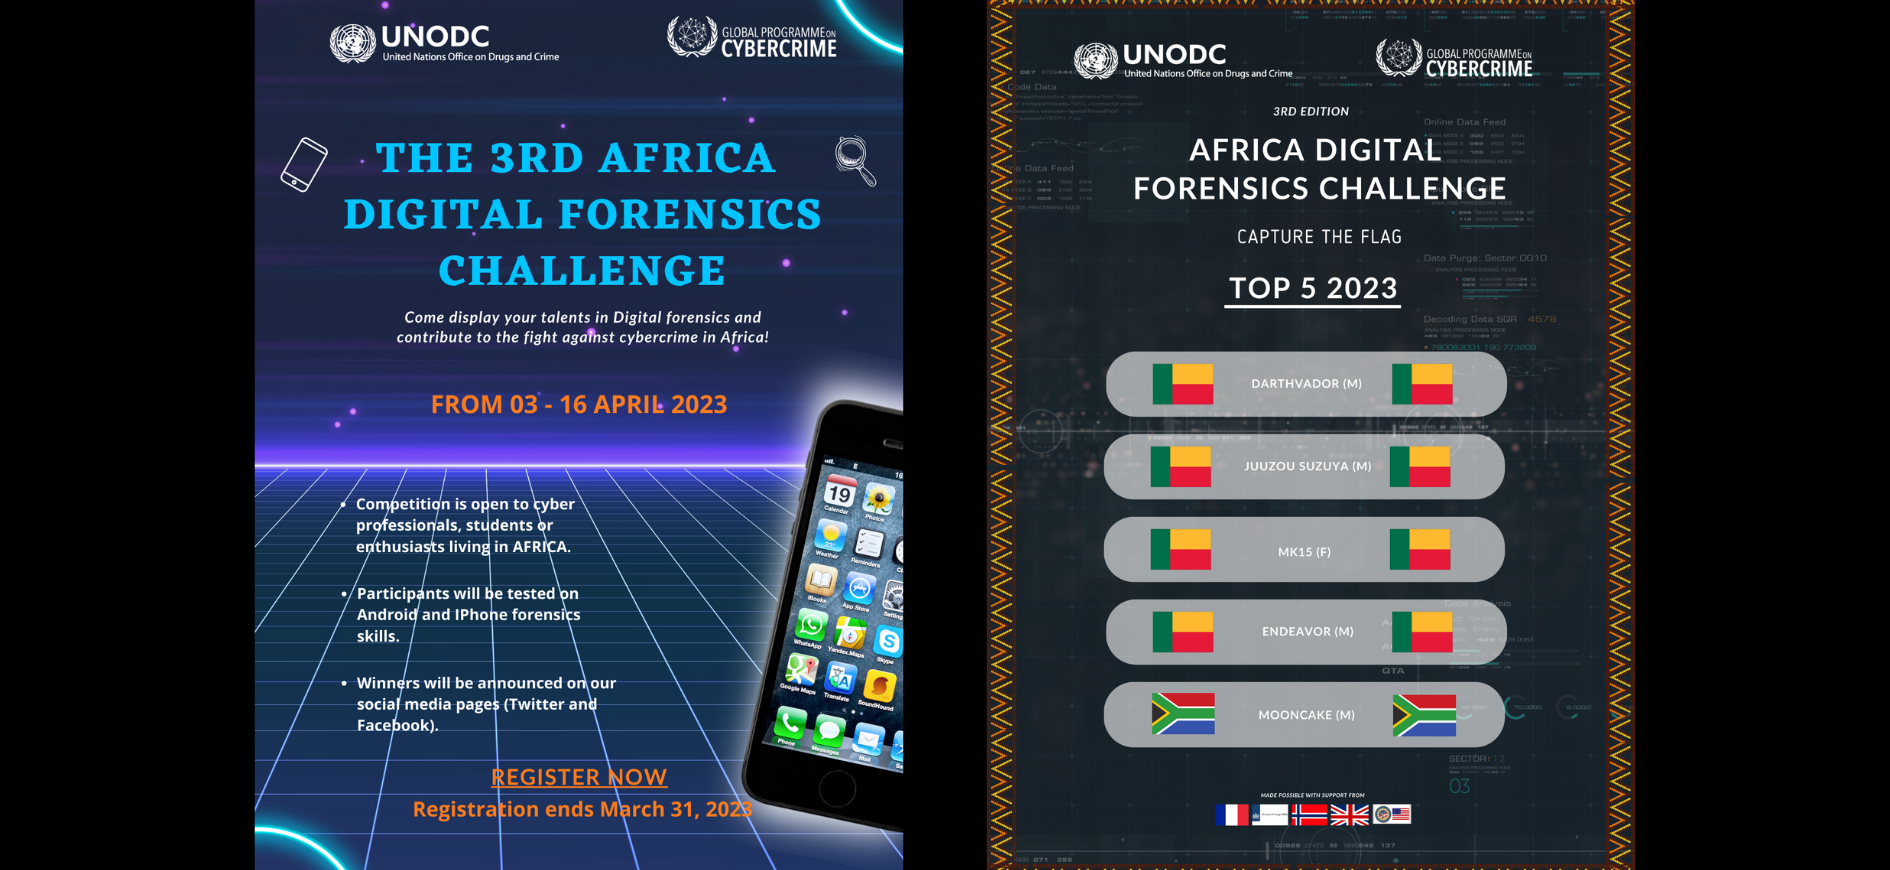  Africa’s Digital Forensics Talents shine bright at the 2023 UNODC Africa Digital Forensics Challenge